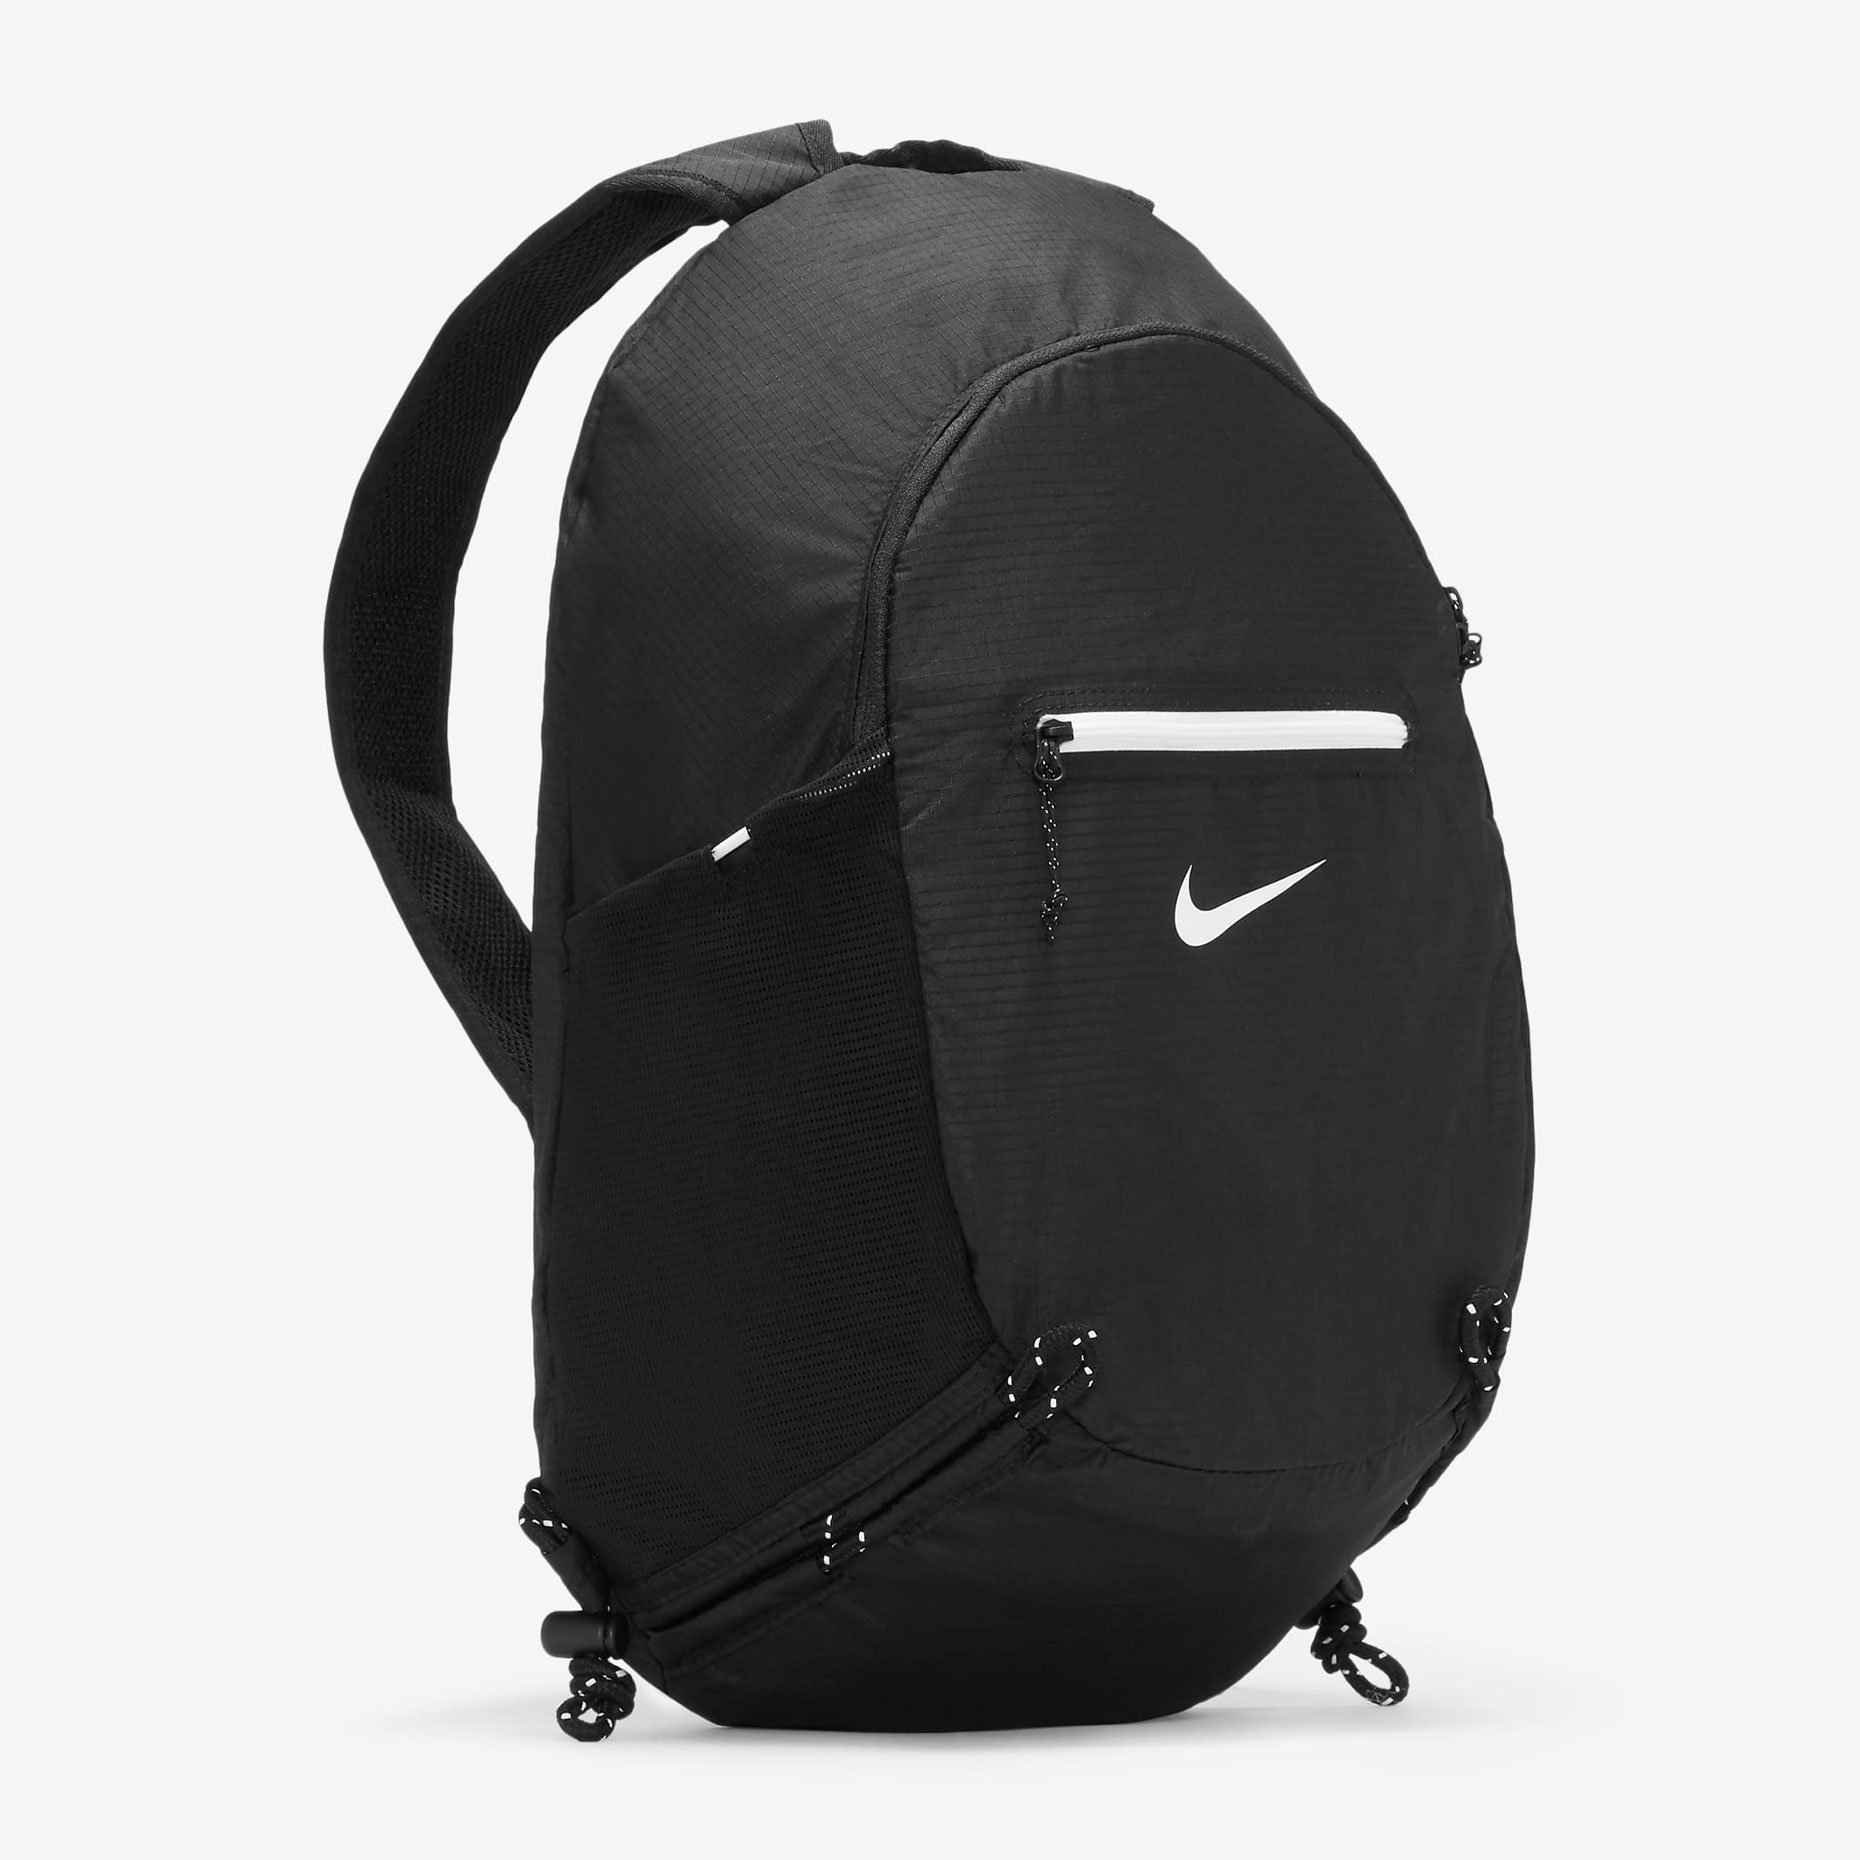 Рюкзак Nike Stash